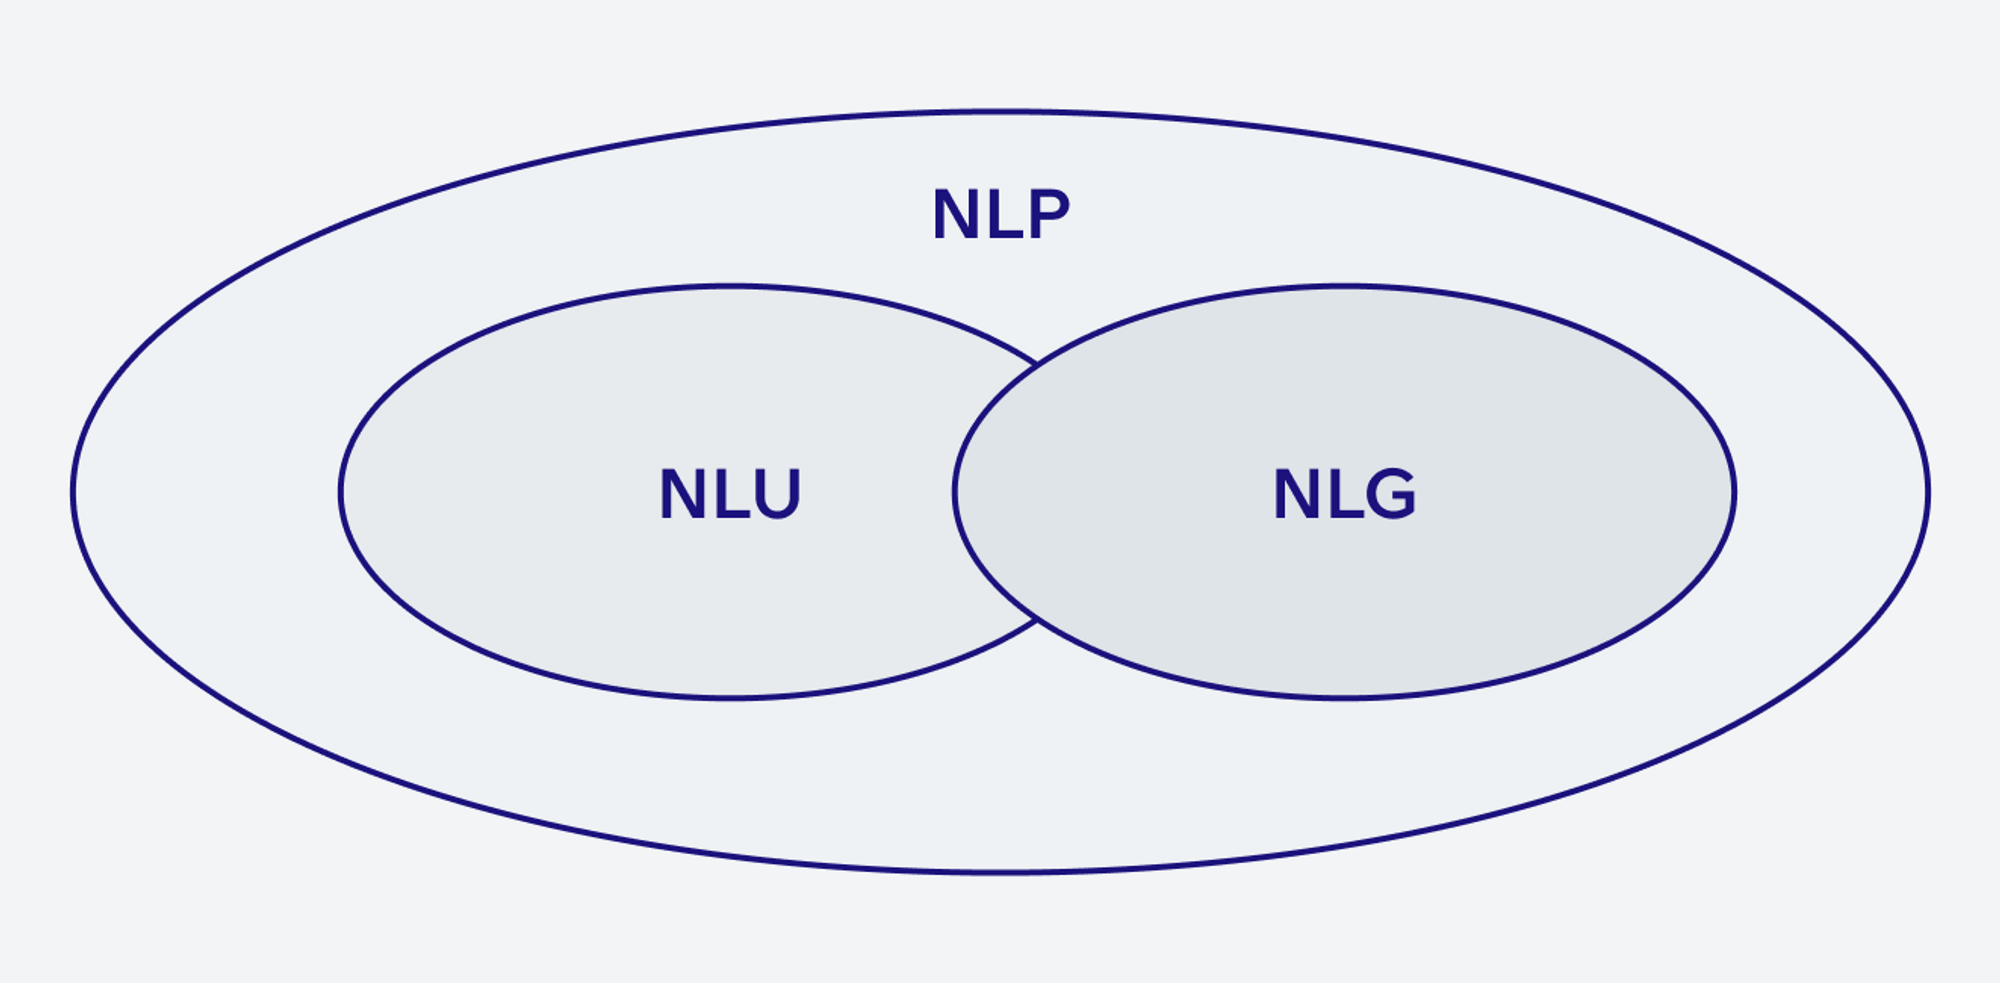 Subfields of NLP